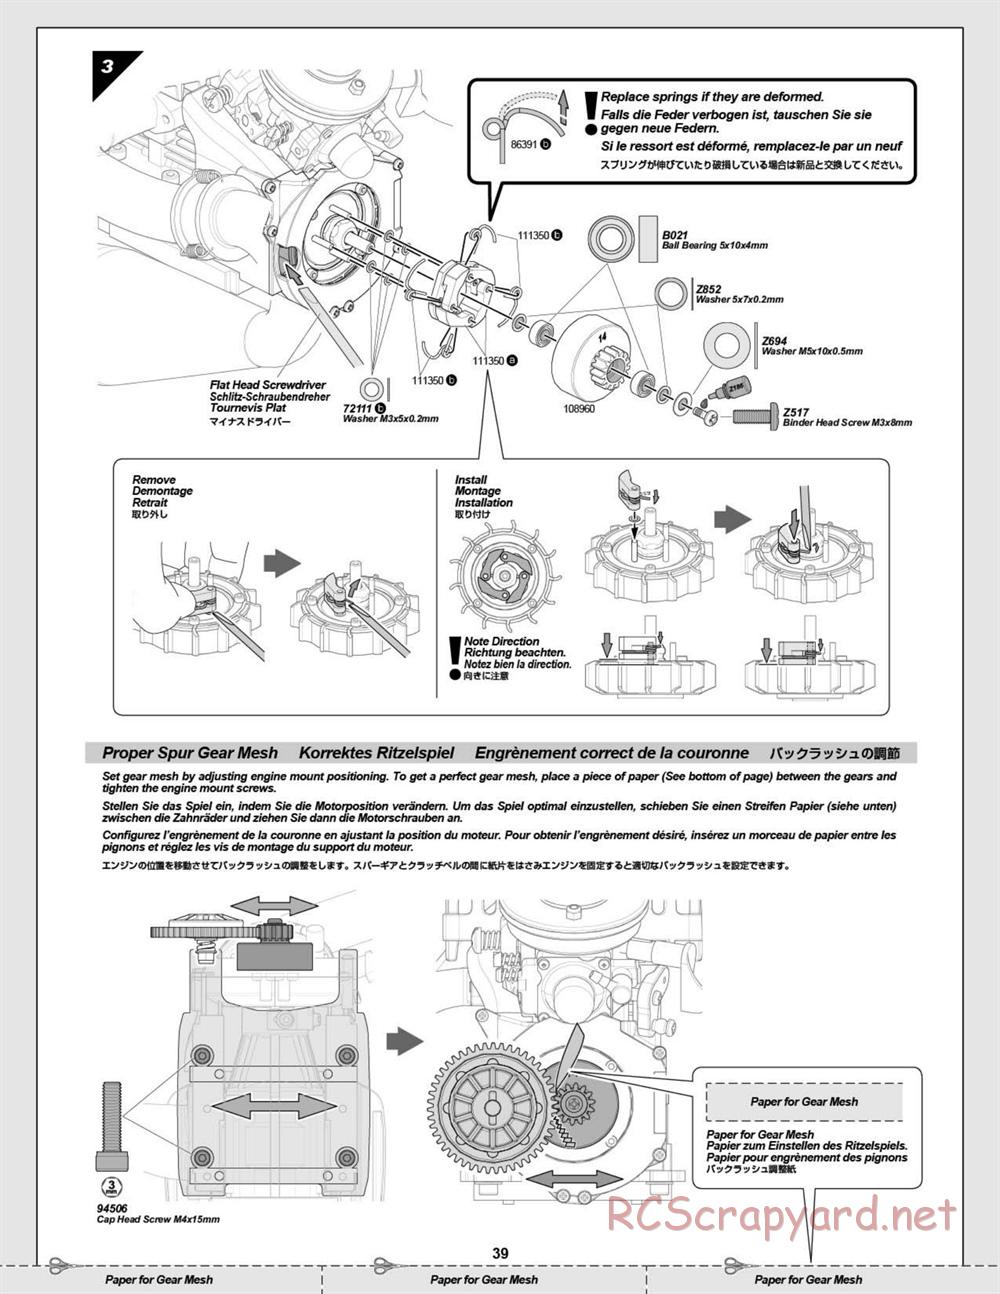 HPI - Savage XL Octane - Manual - Page 39